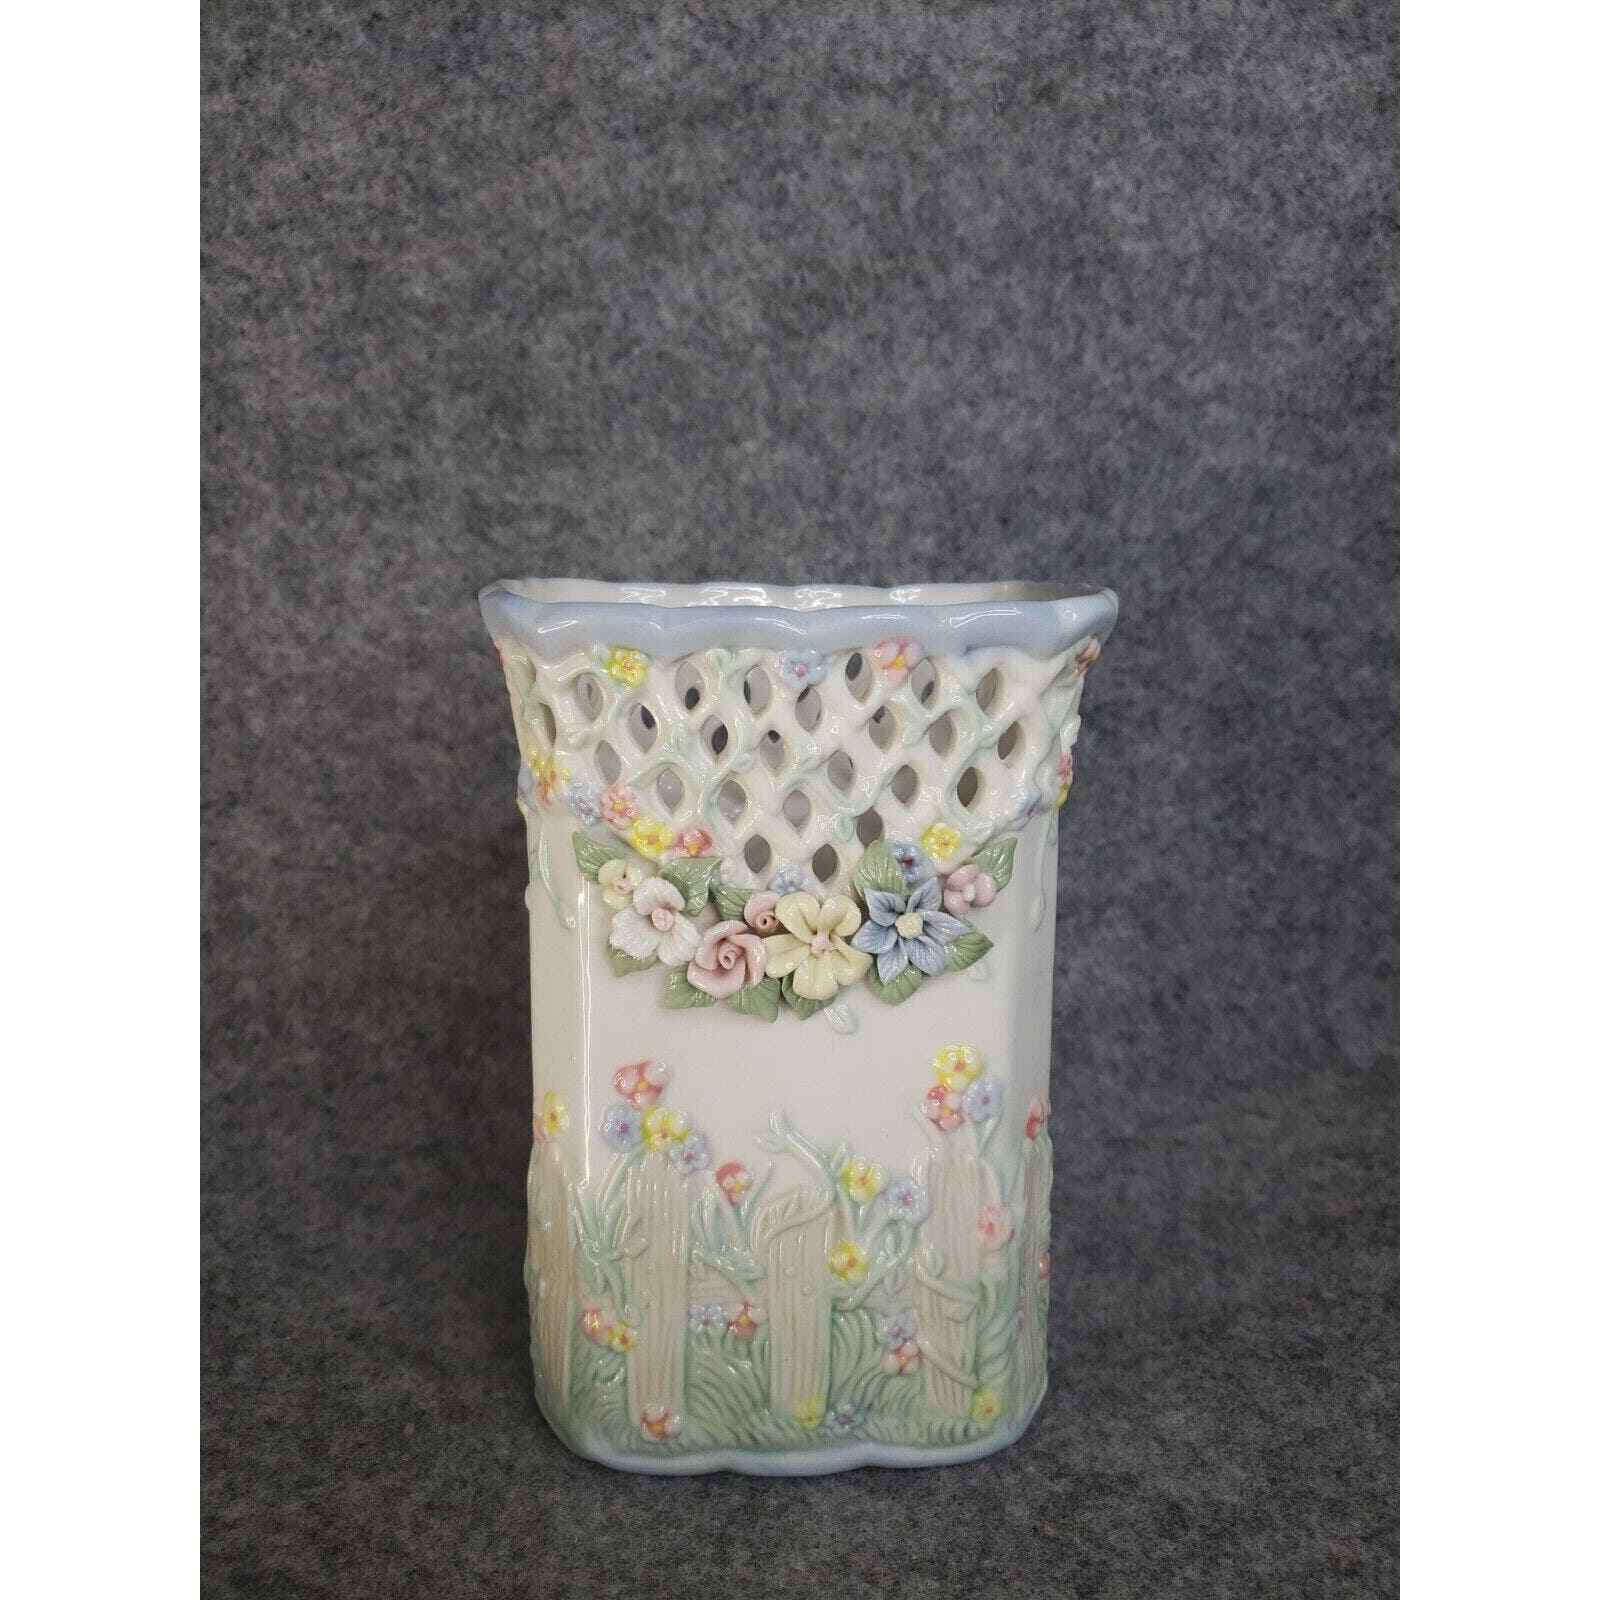 Vintage Ceramic Porcelain 3D Floral Lattice Square Flower Vase Home Decor